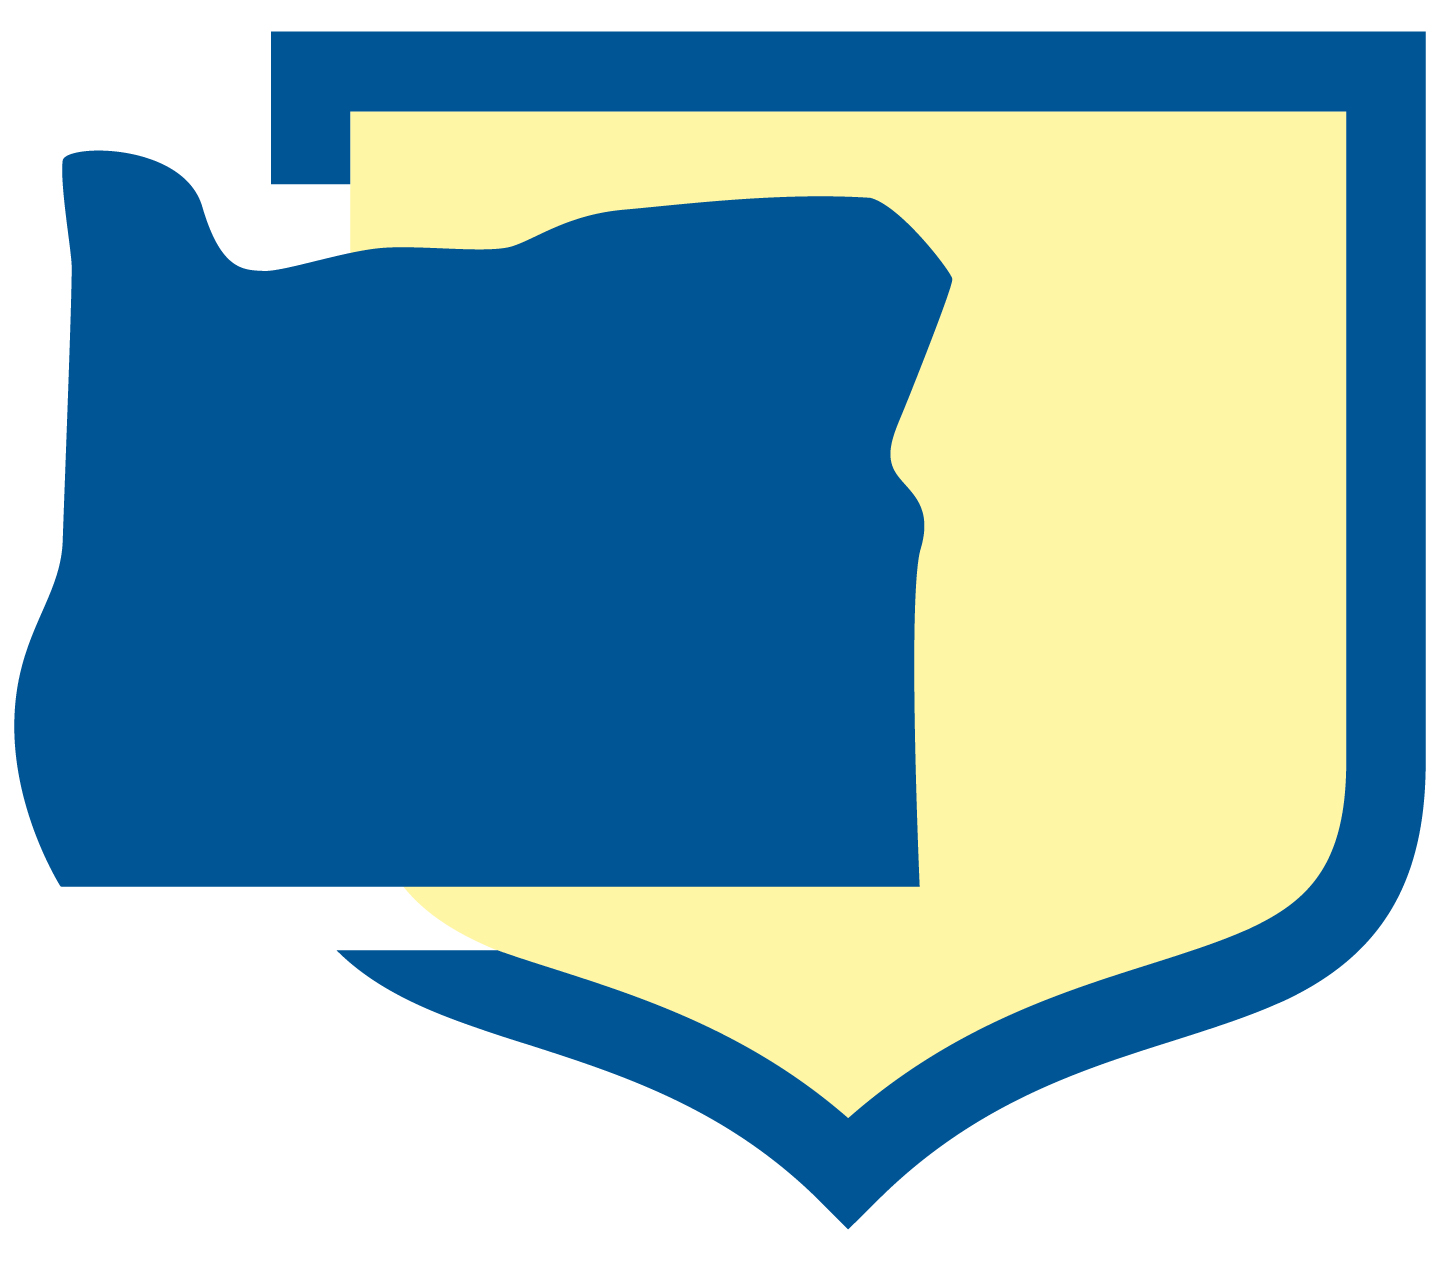 Oregon Health Insurance Marketplace logo